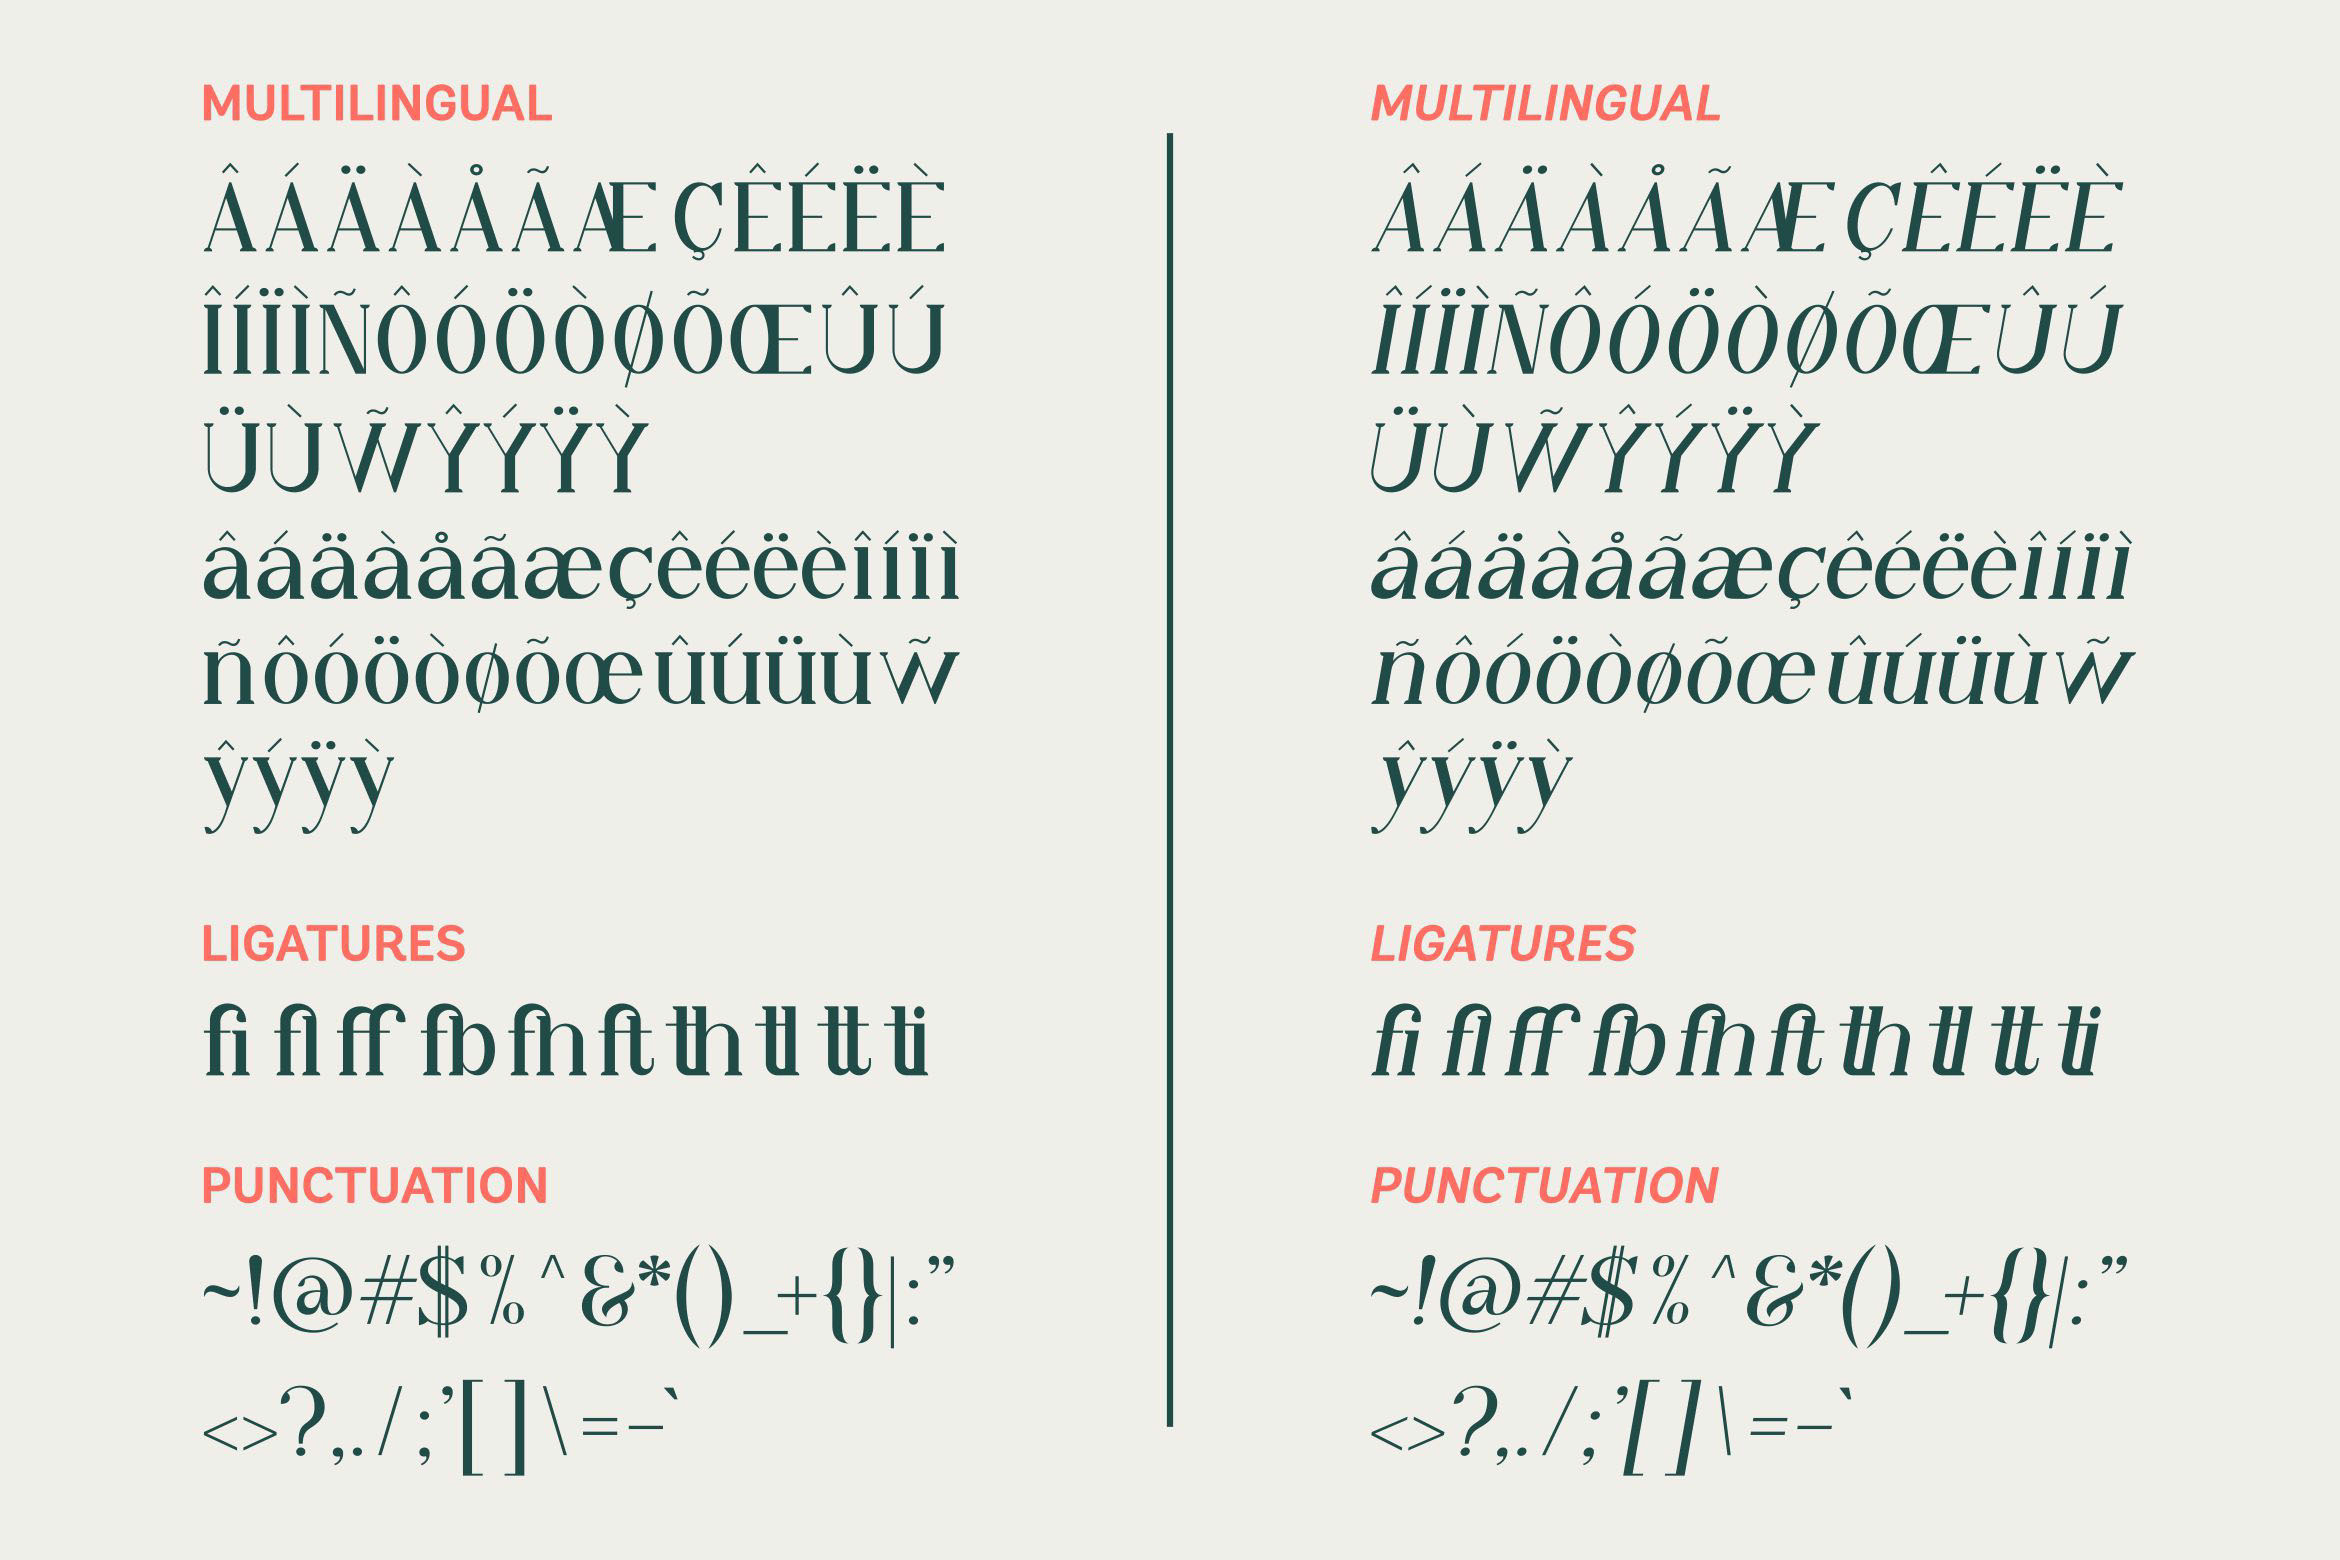 Qiba Free Font - serif